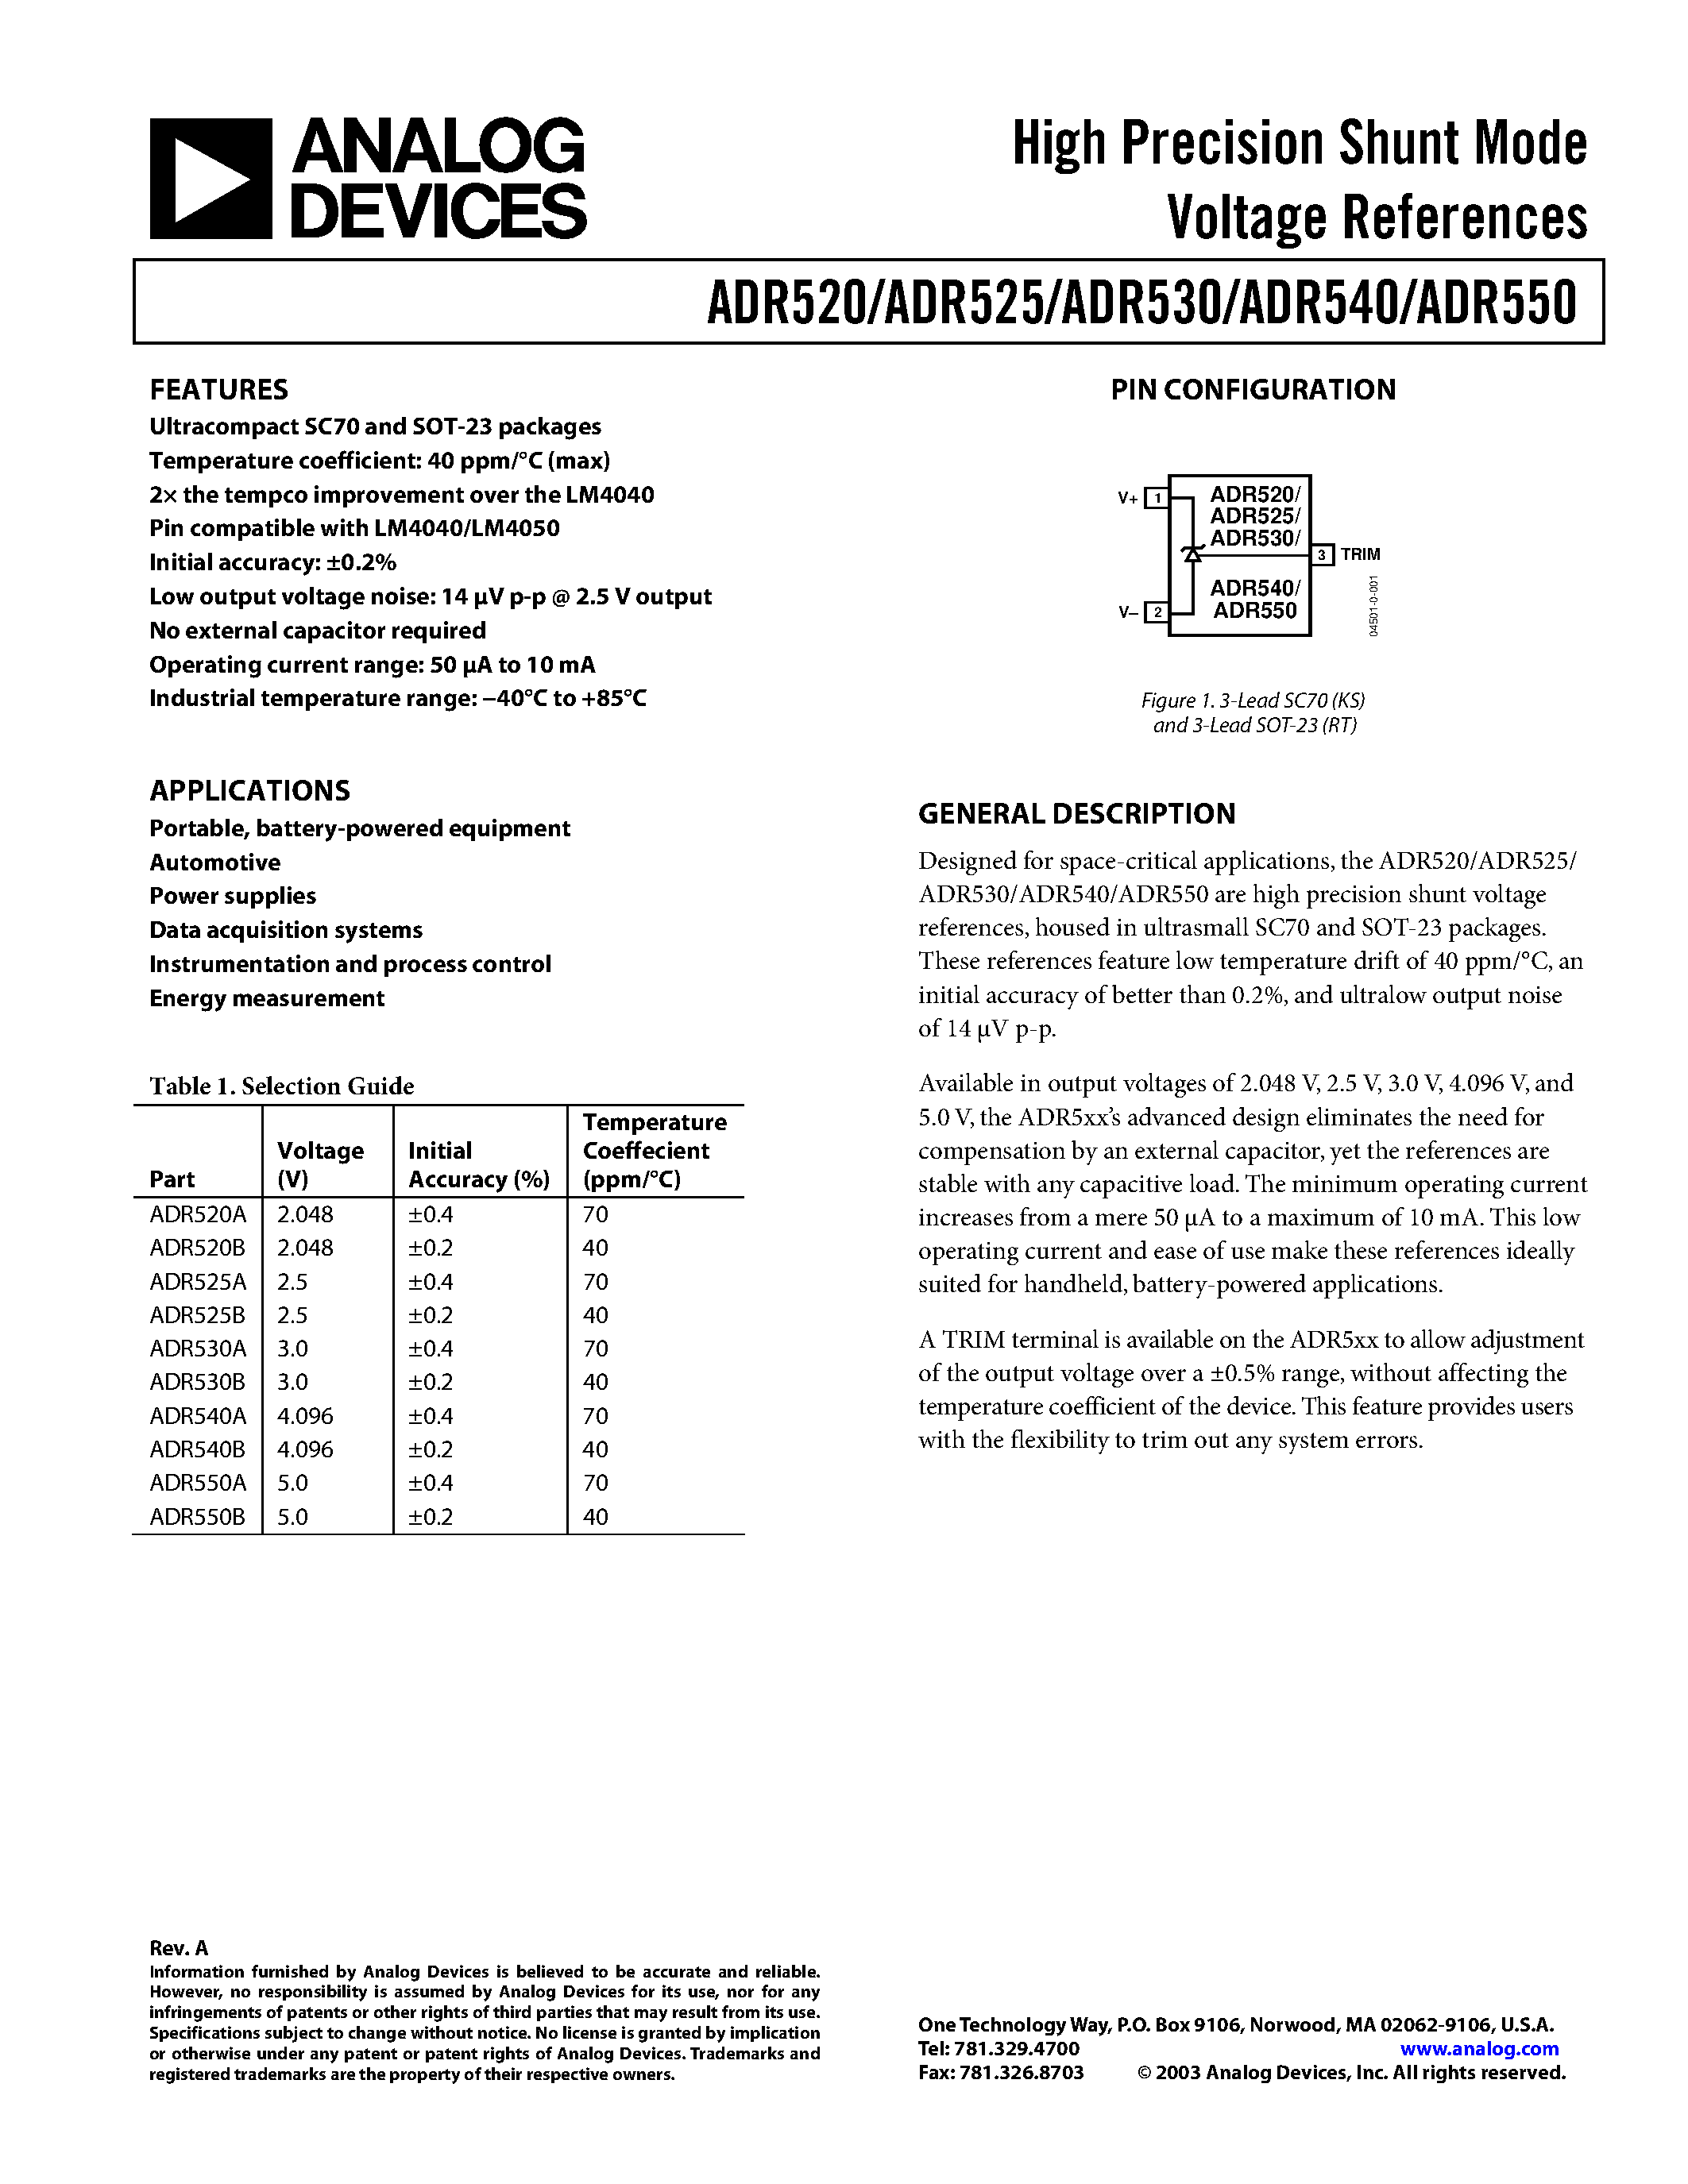 Даташит ADR550ART-R2 - High Precision Shunt Mode Voltage References страница 1